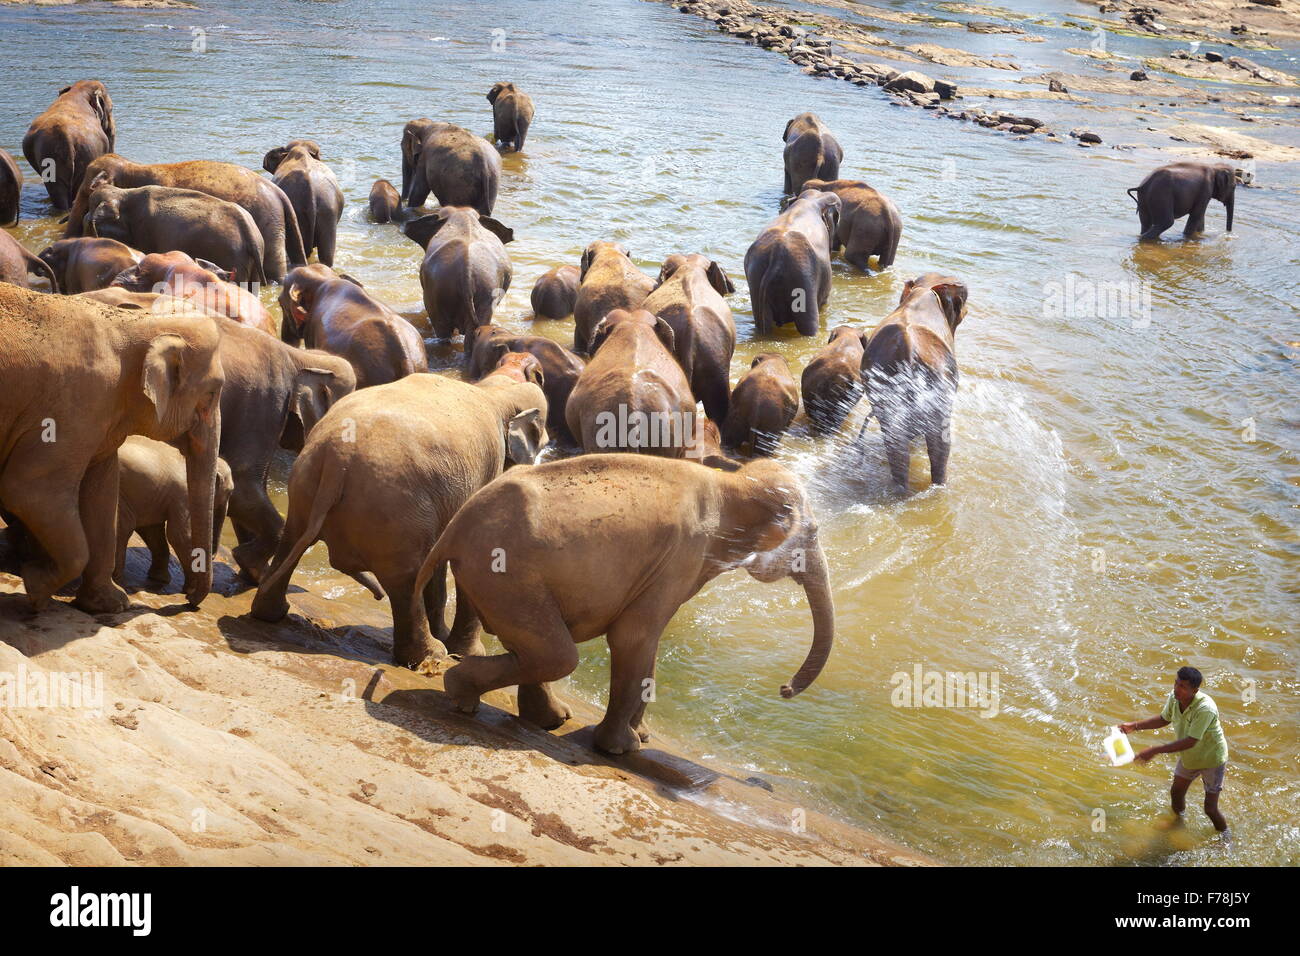 Sri Lanka - elephants taking bath in the river, Pinnawela Elephant Orphanage Stock Photo